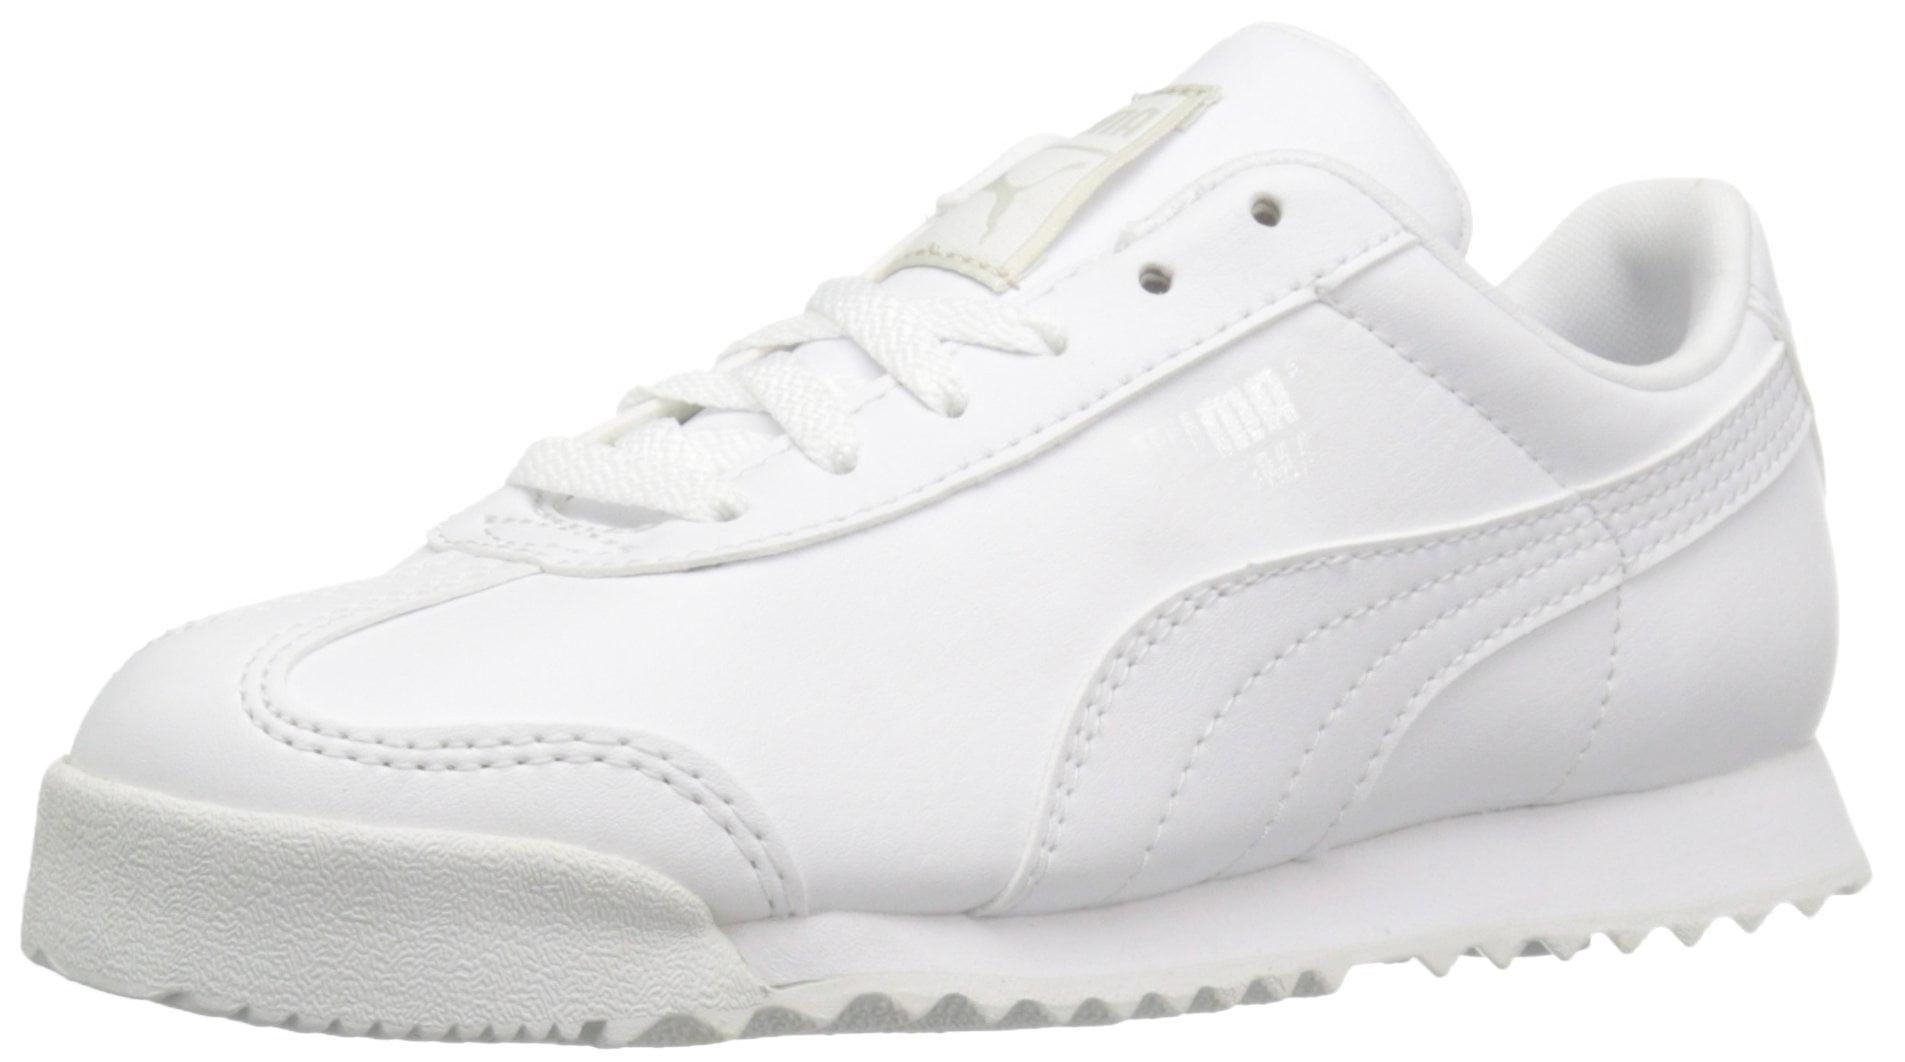 Light Grey Toddler Kids Sneakers Tennis Shoes 354260 14 PUMA Roma Basic White 